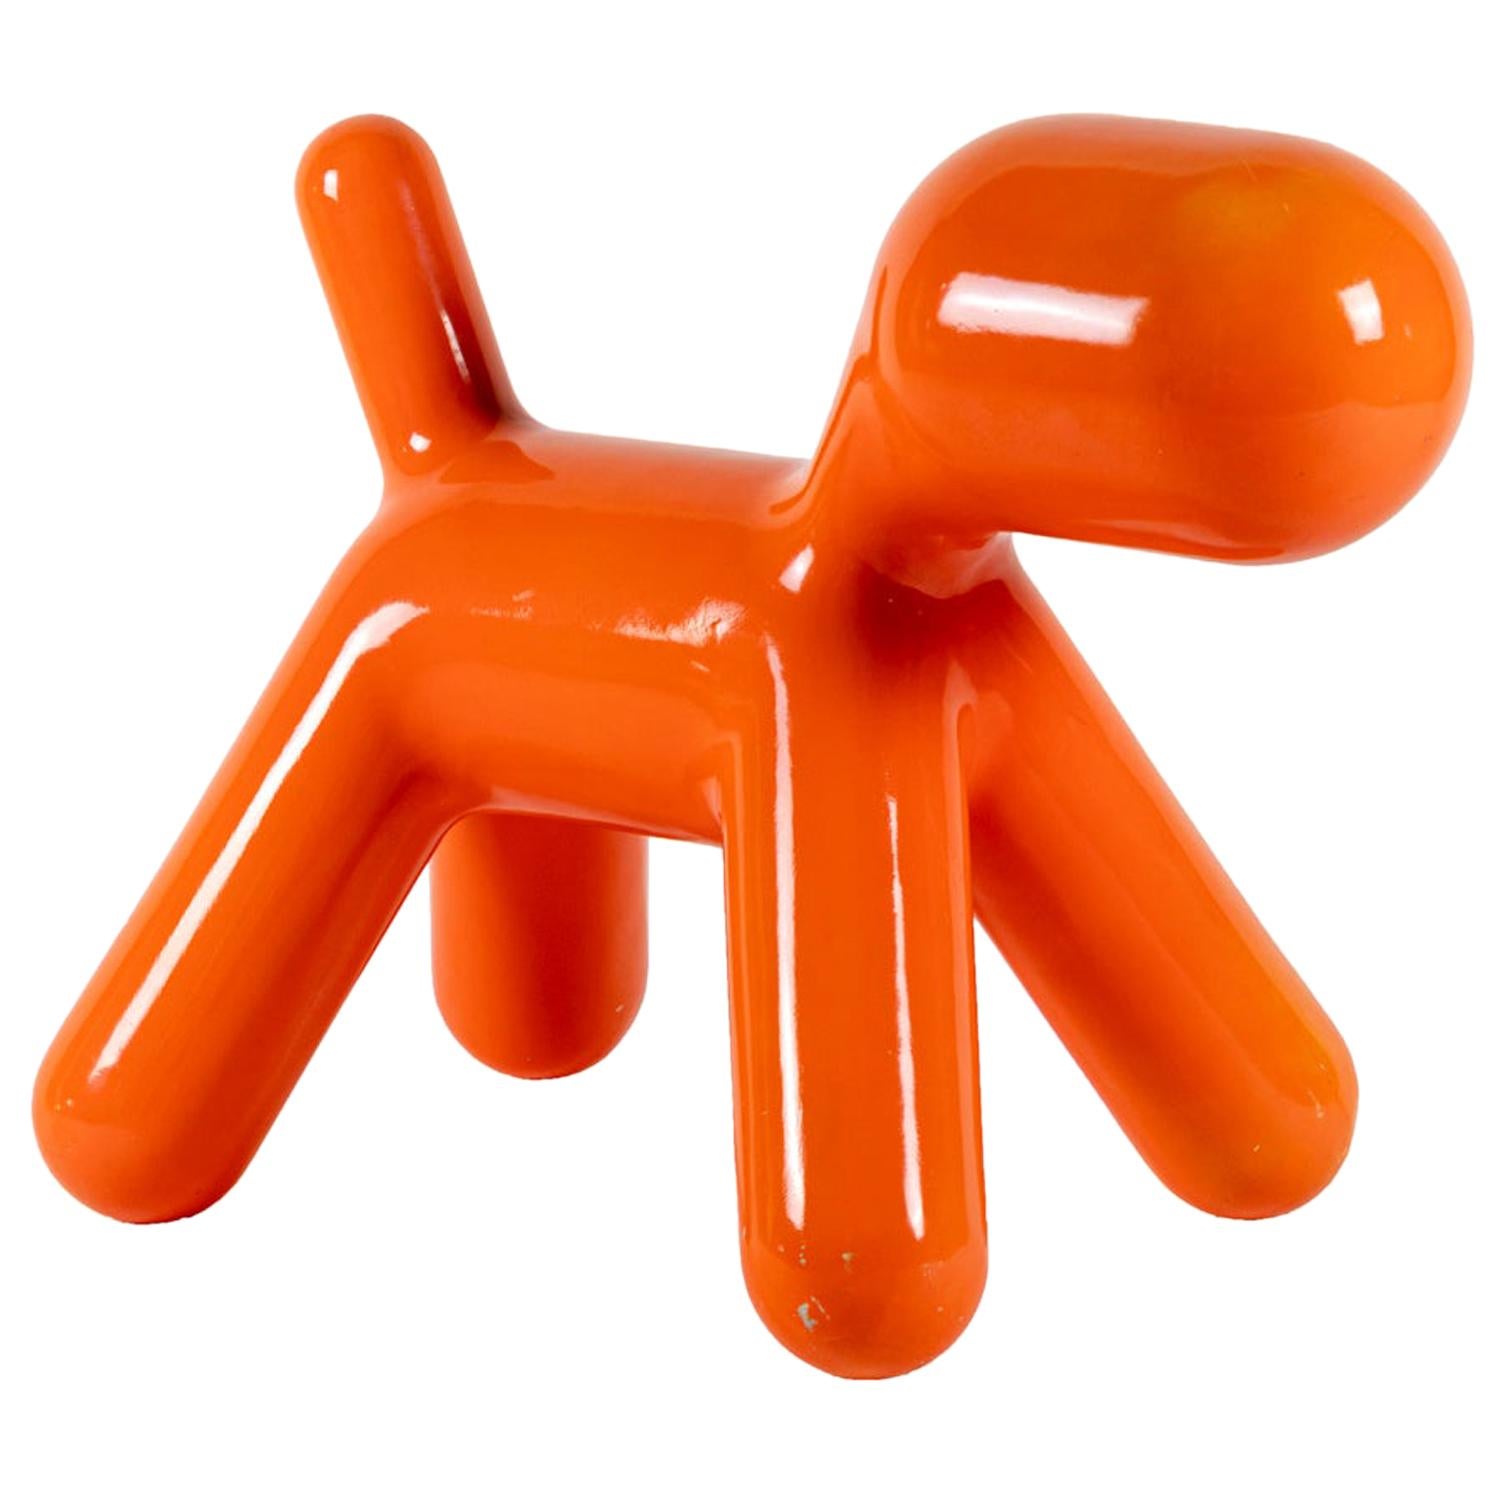 Eero Aarnio, “Puppy”, Orange Polyethylene Sculpture, 2005